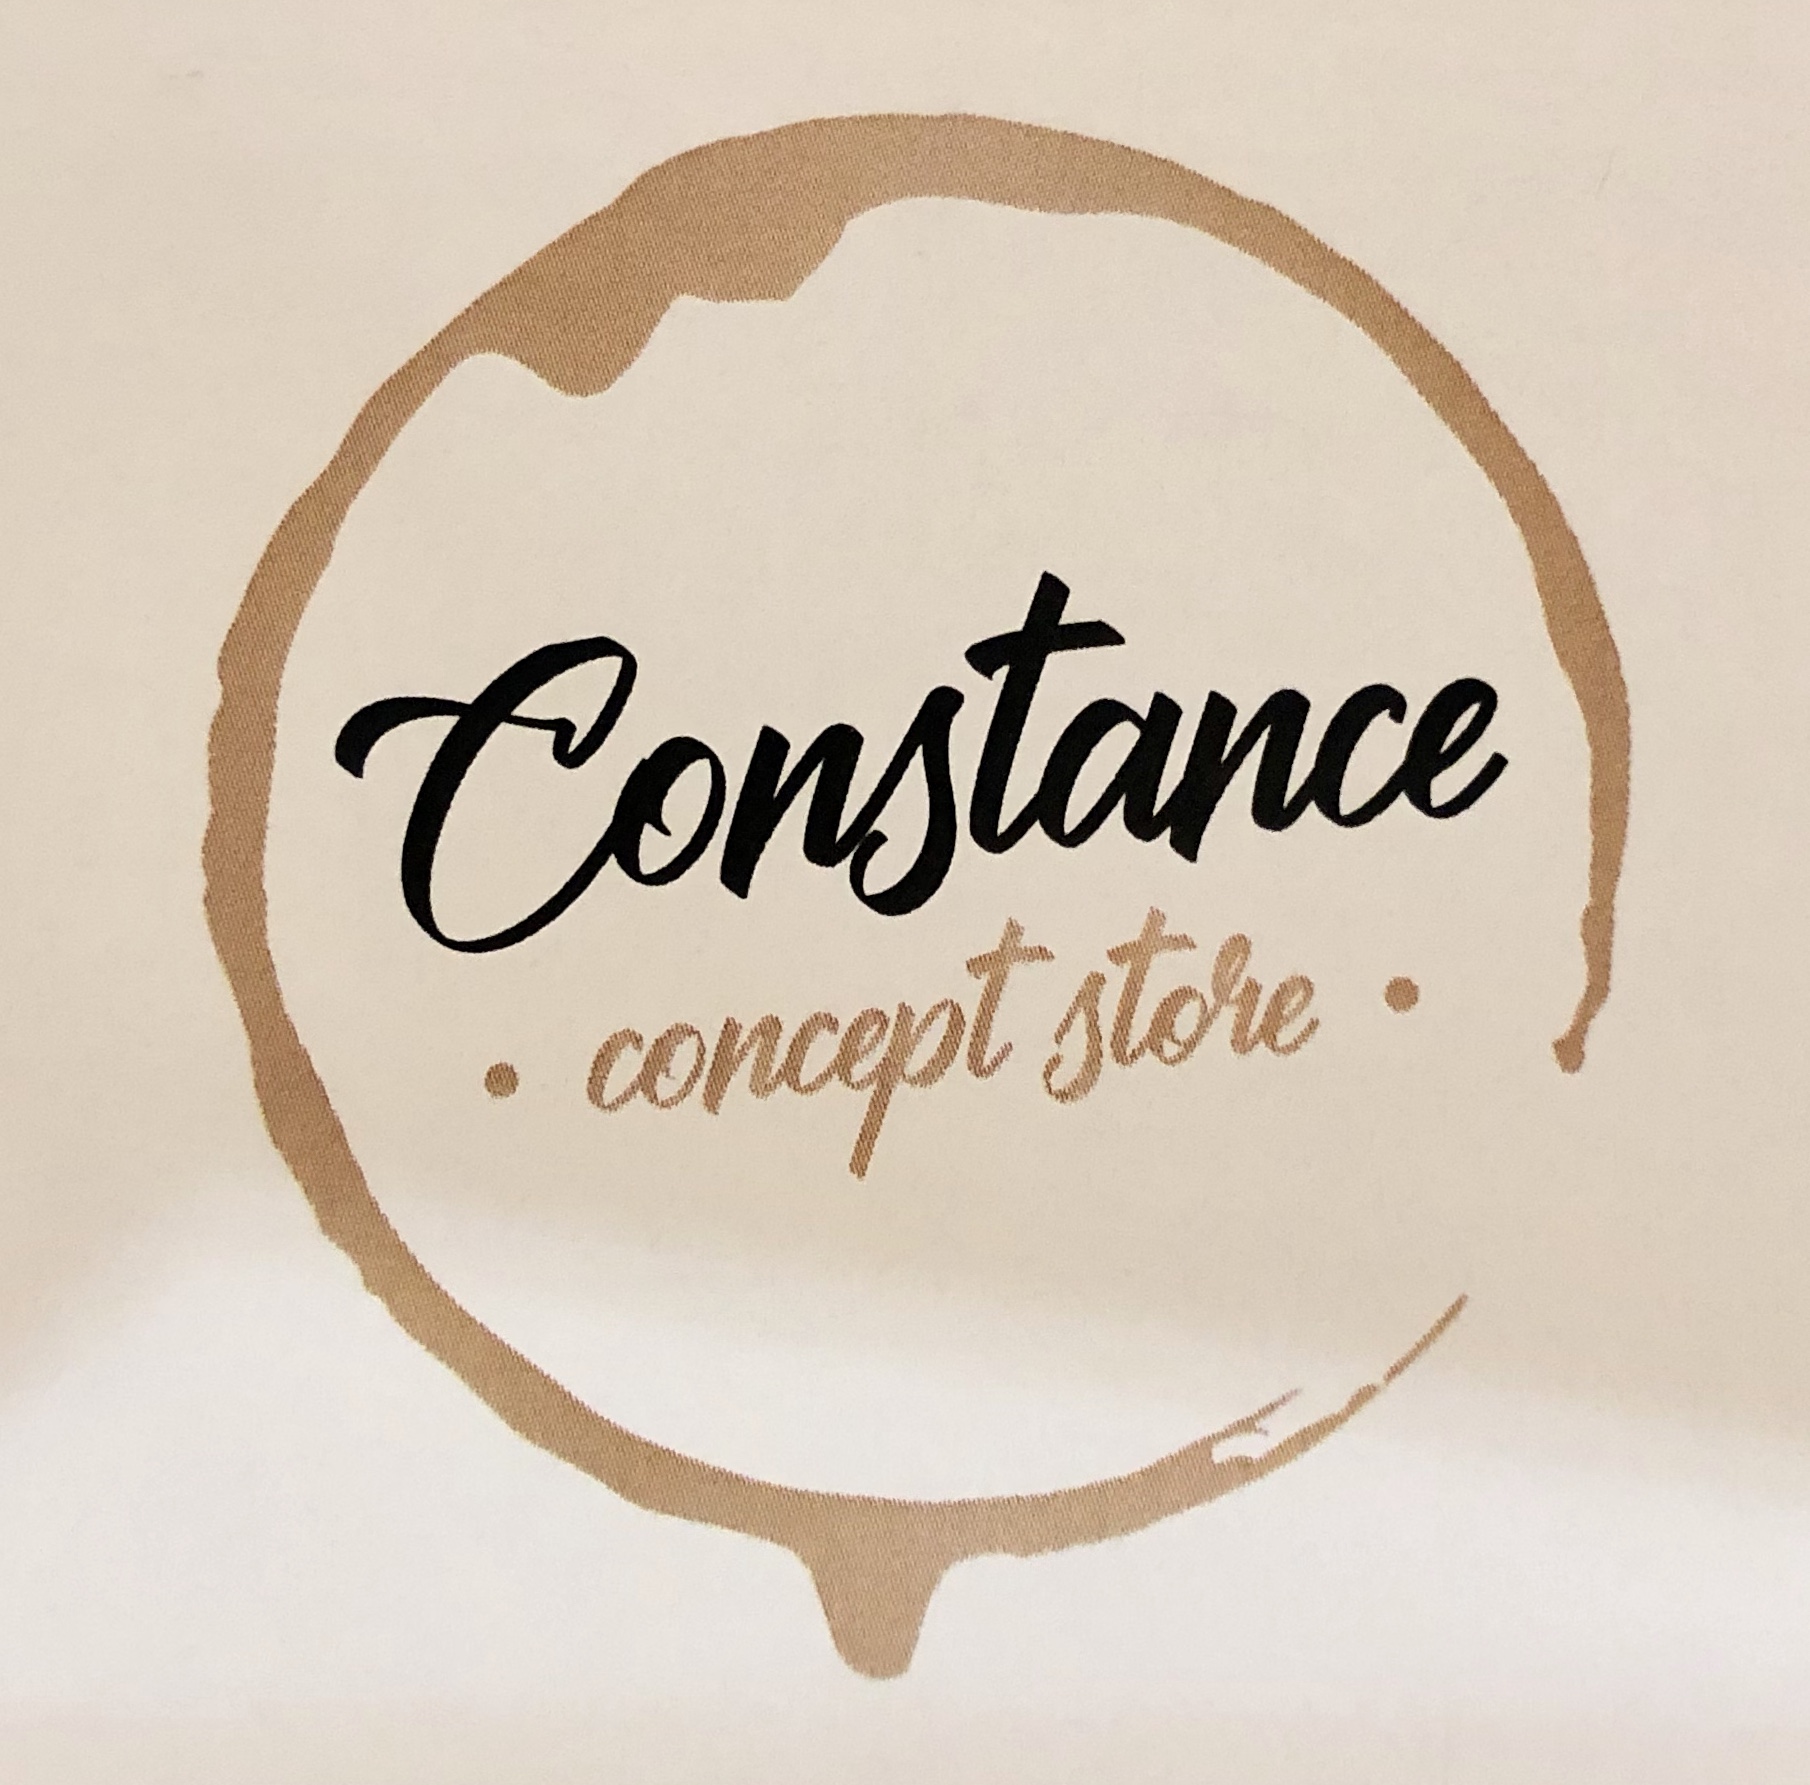 Constance Concept Store